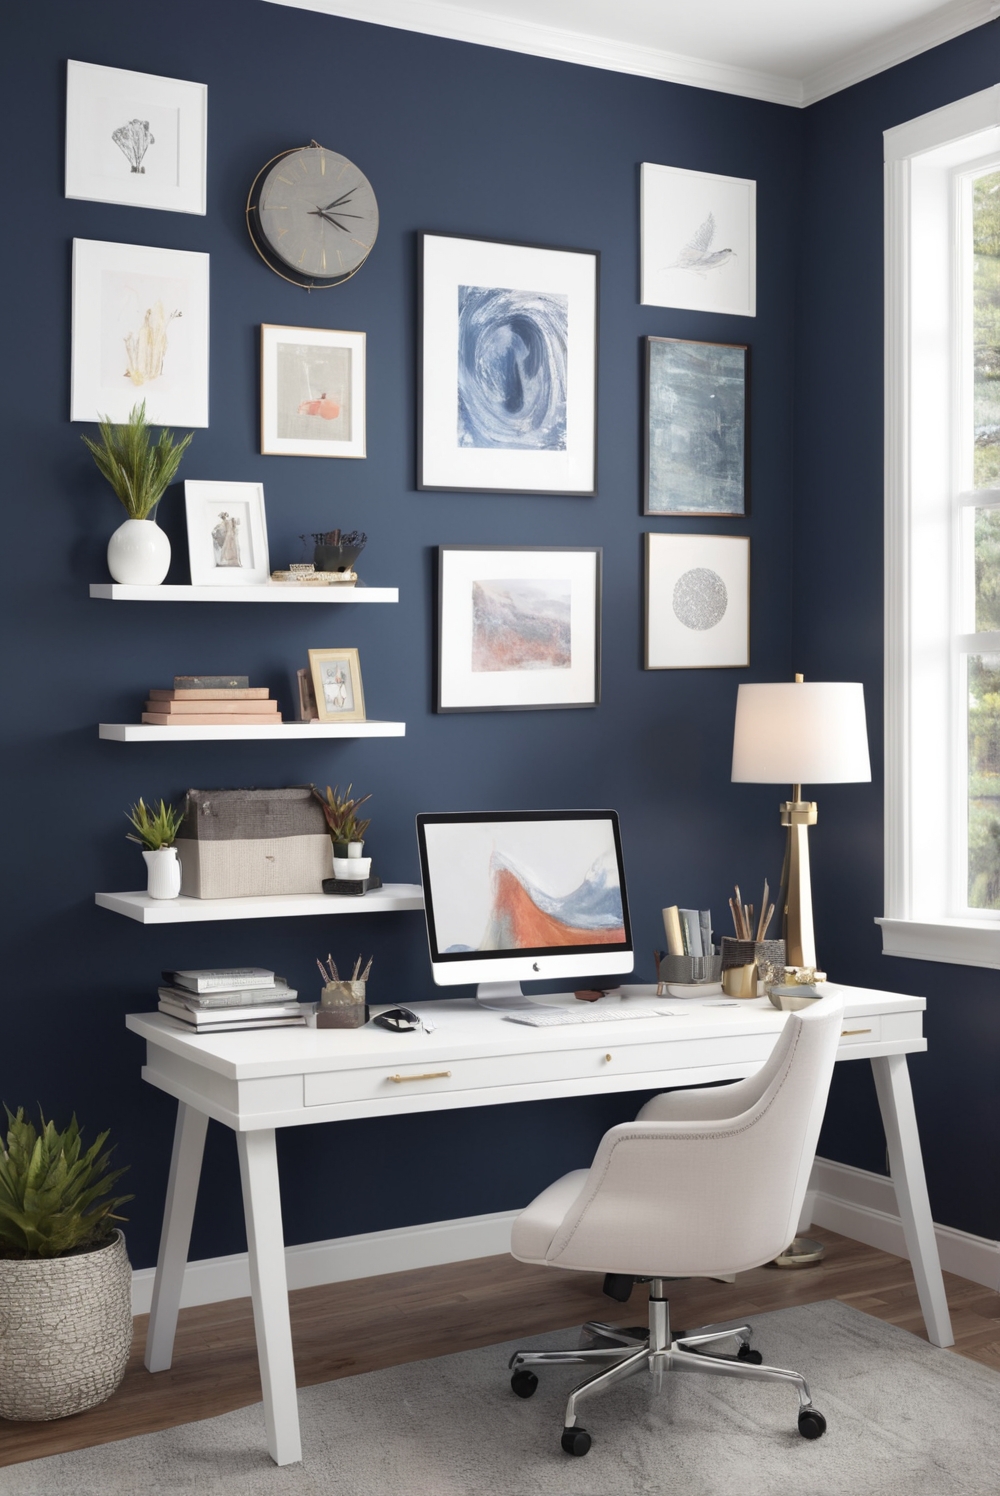 gray paint colors, modern office design, office color schemes, futuristic decor, interior design trends, office interior design, commercial interior design